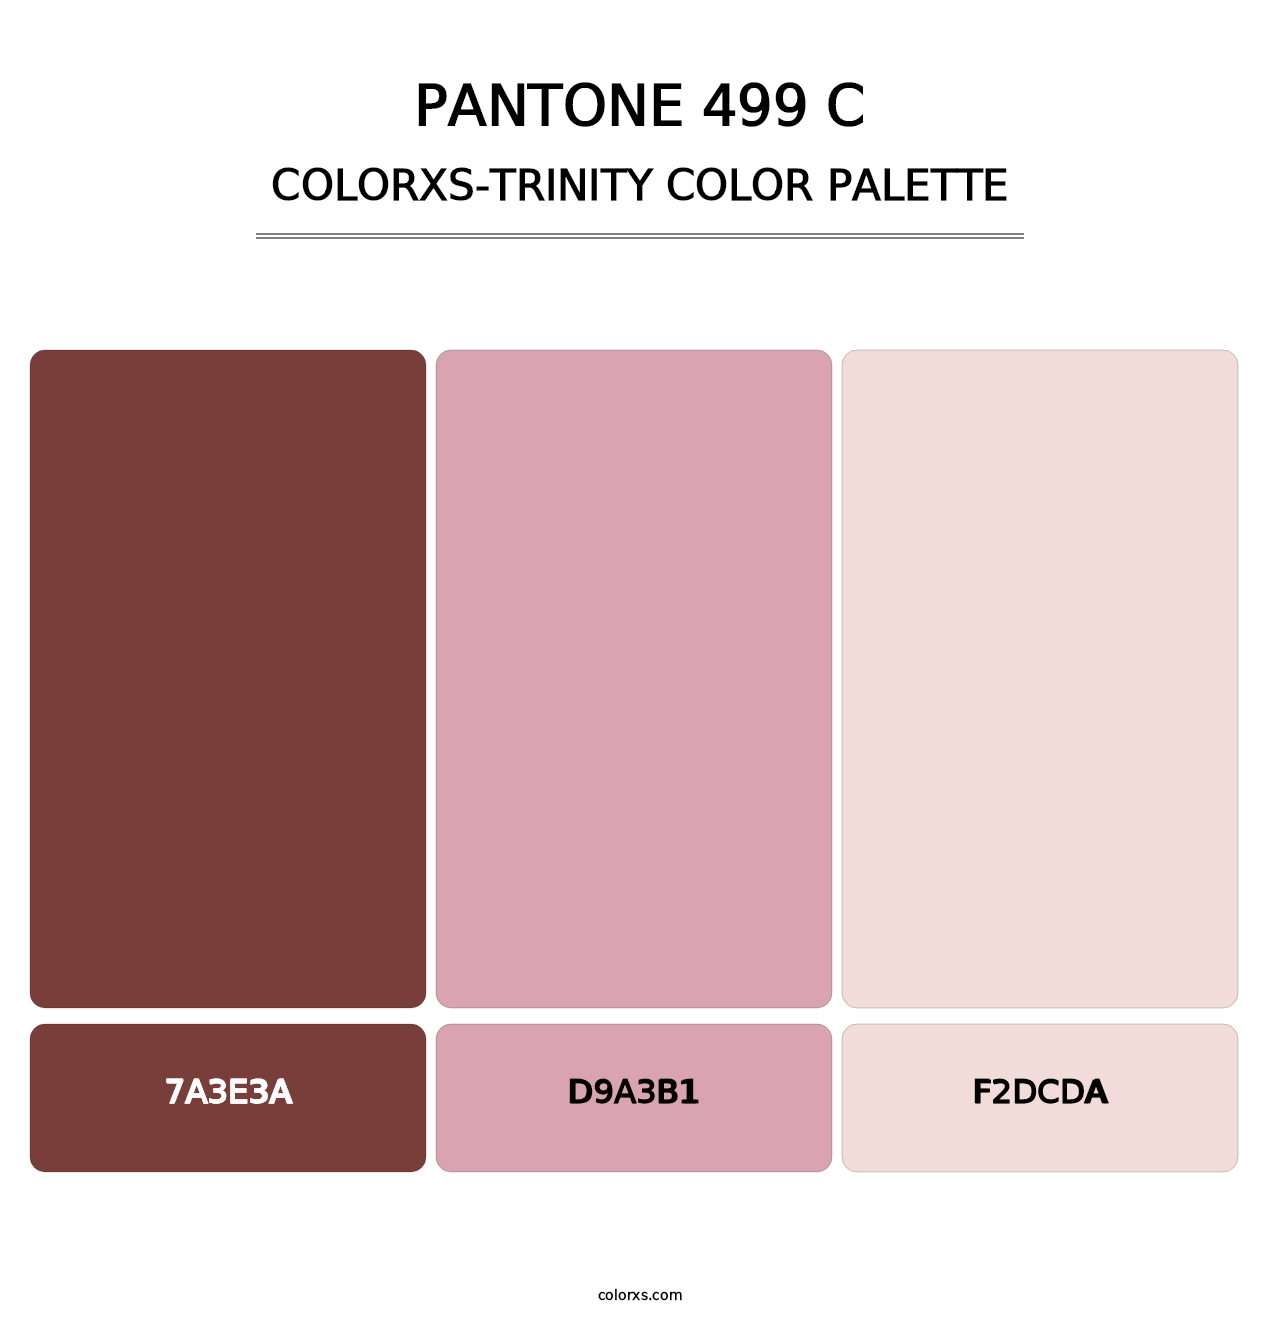 PANTONE 499 C - Colorxs Trinity Palette